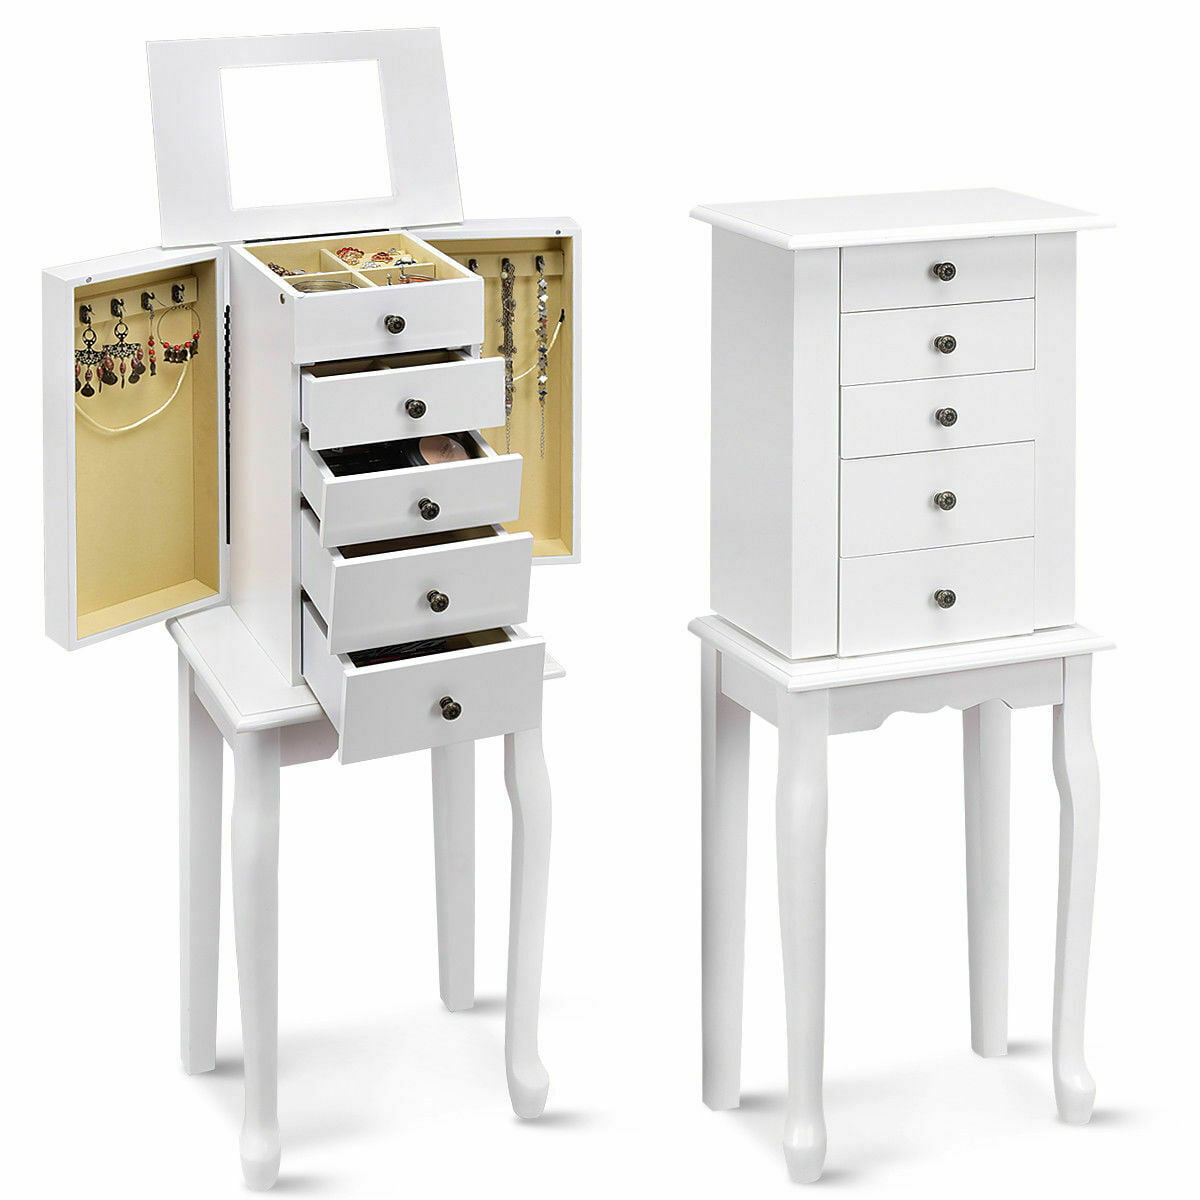 Costway Jewelry Cabinet Storage Chest, Mirror Jewelry Cabinet Chest